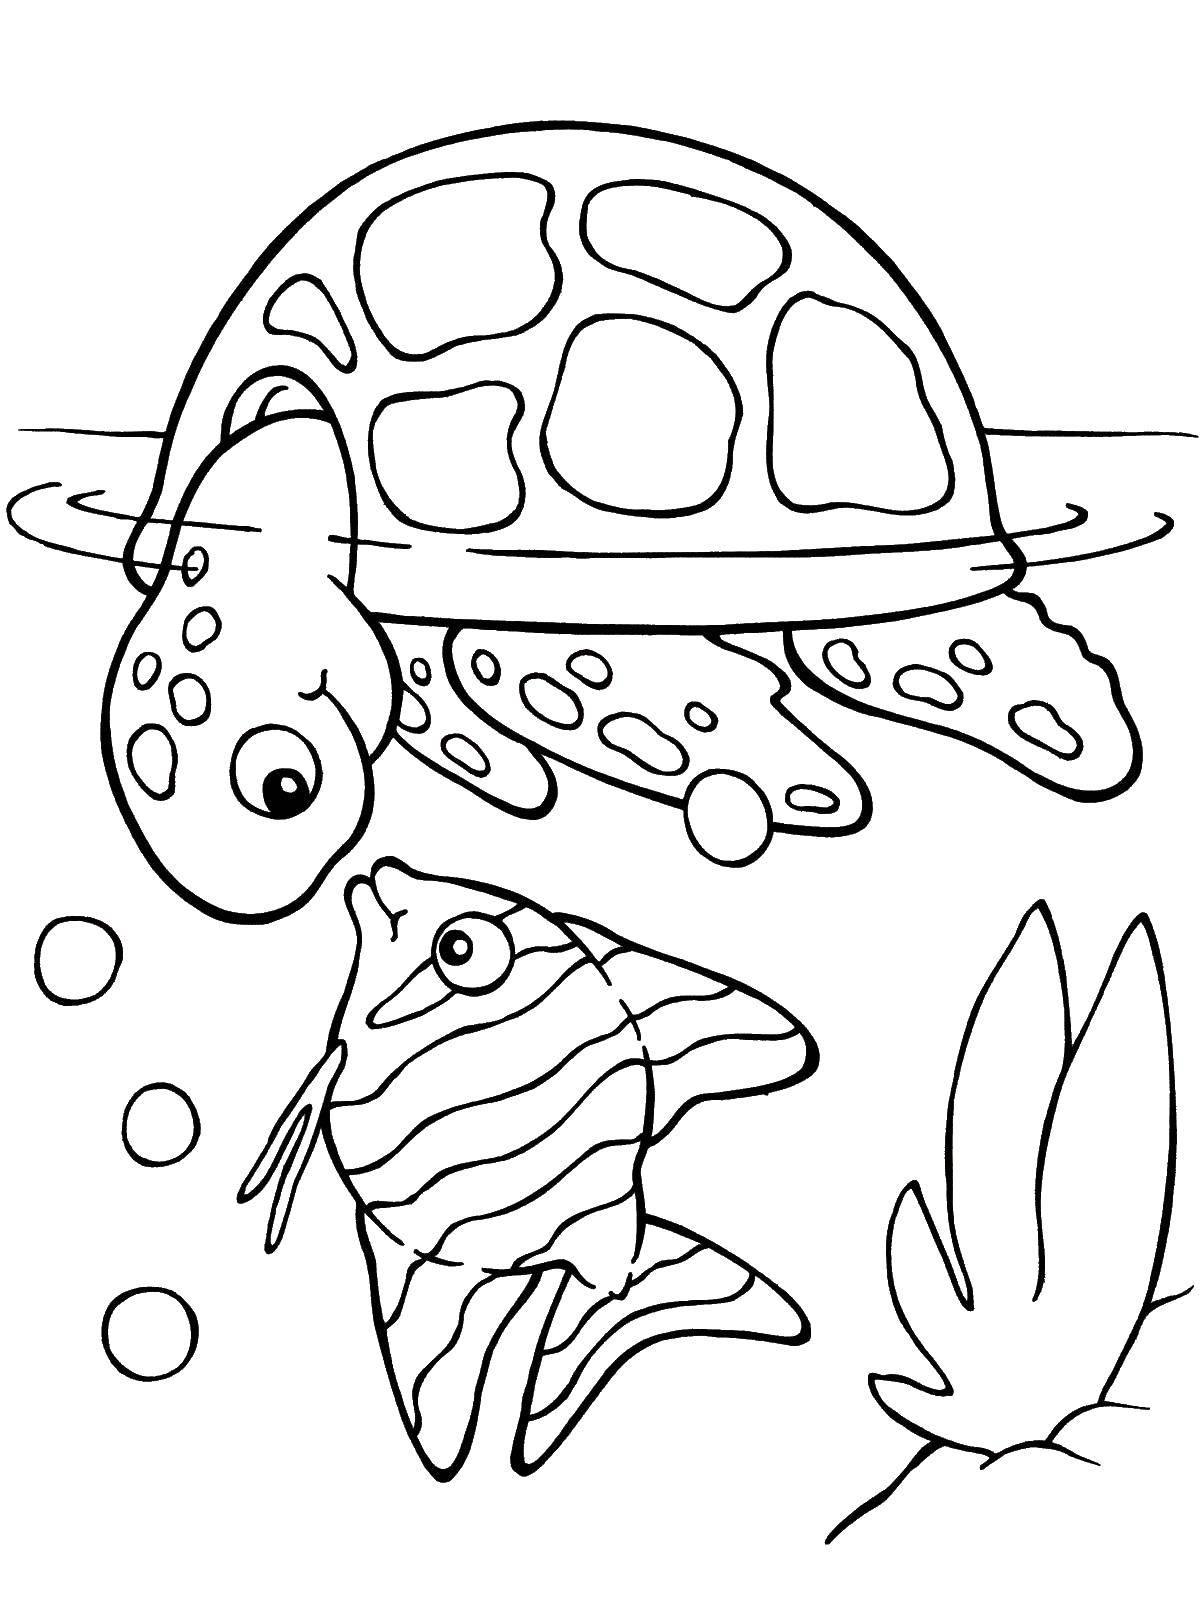 Название: Раскраска Черепаха с рыбкой. Категория: раскраски. Теги: черепаха.